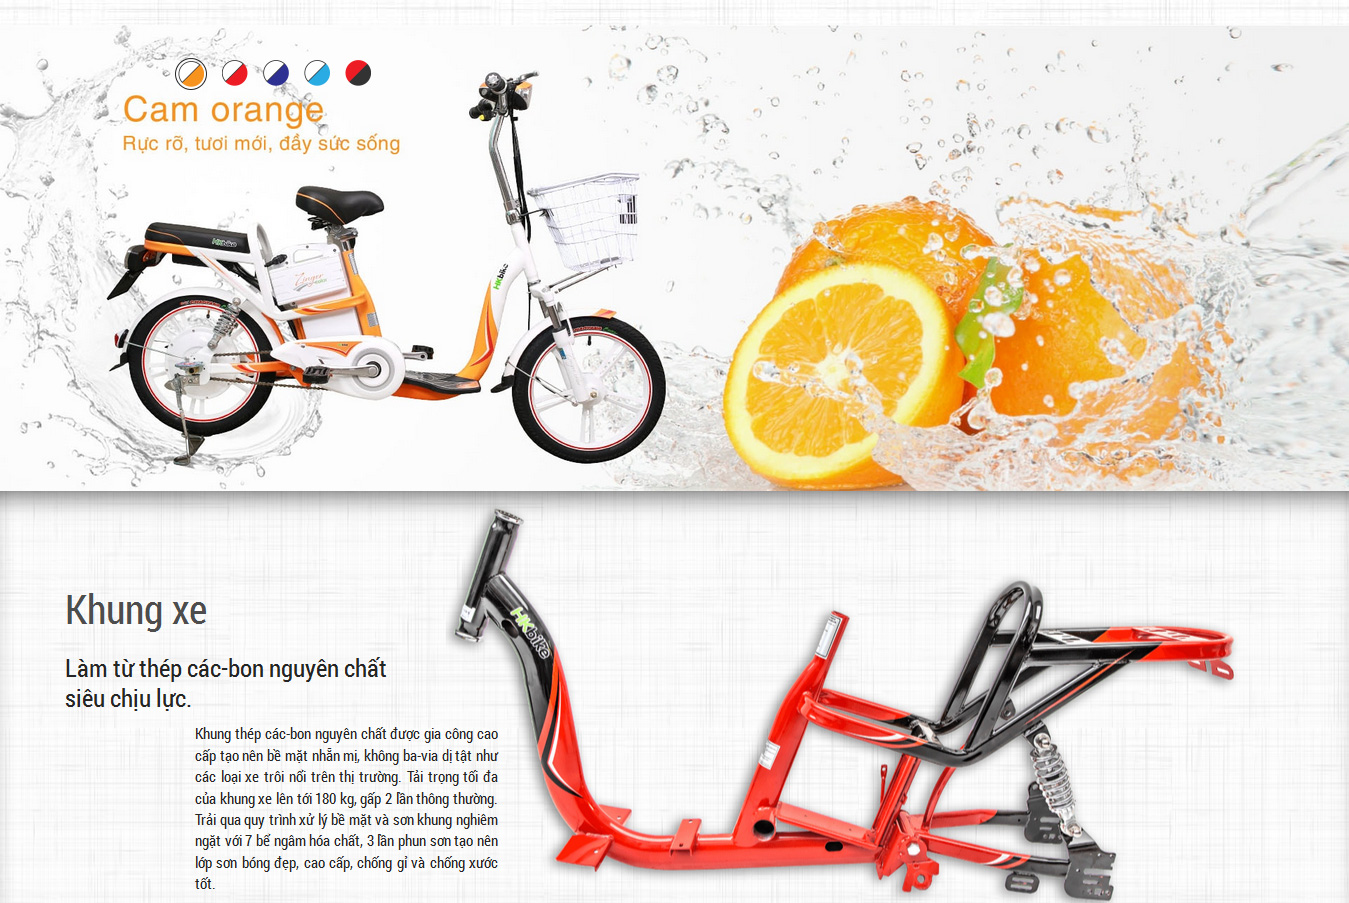 Xe đạp điện Zinger Color Samsung Battery